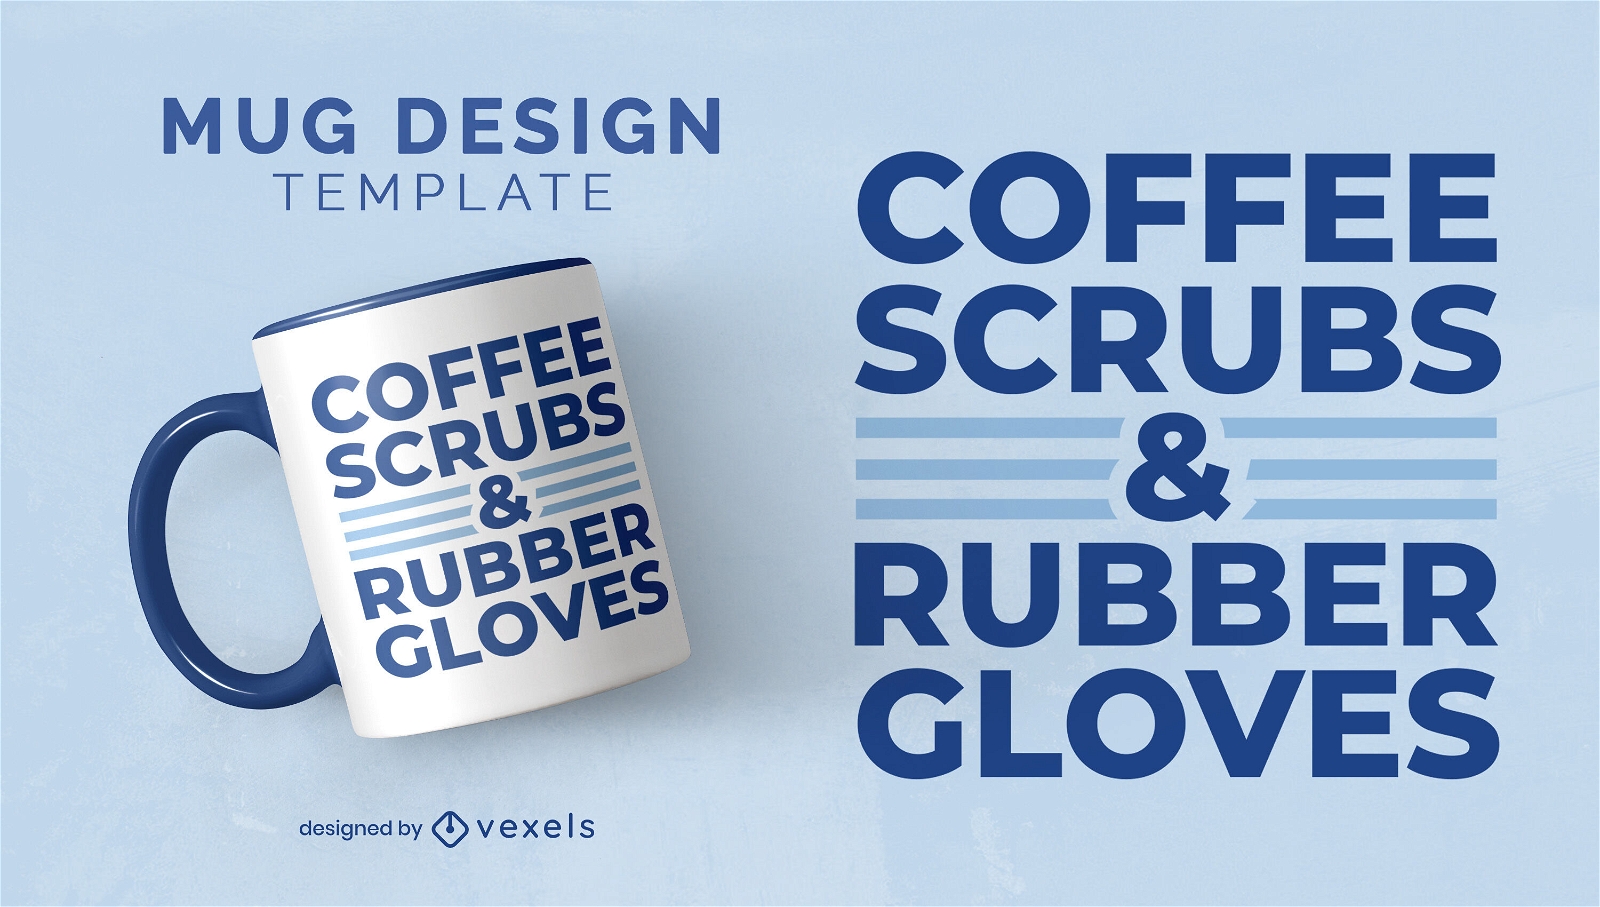 Coffee scrubs mug design